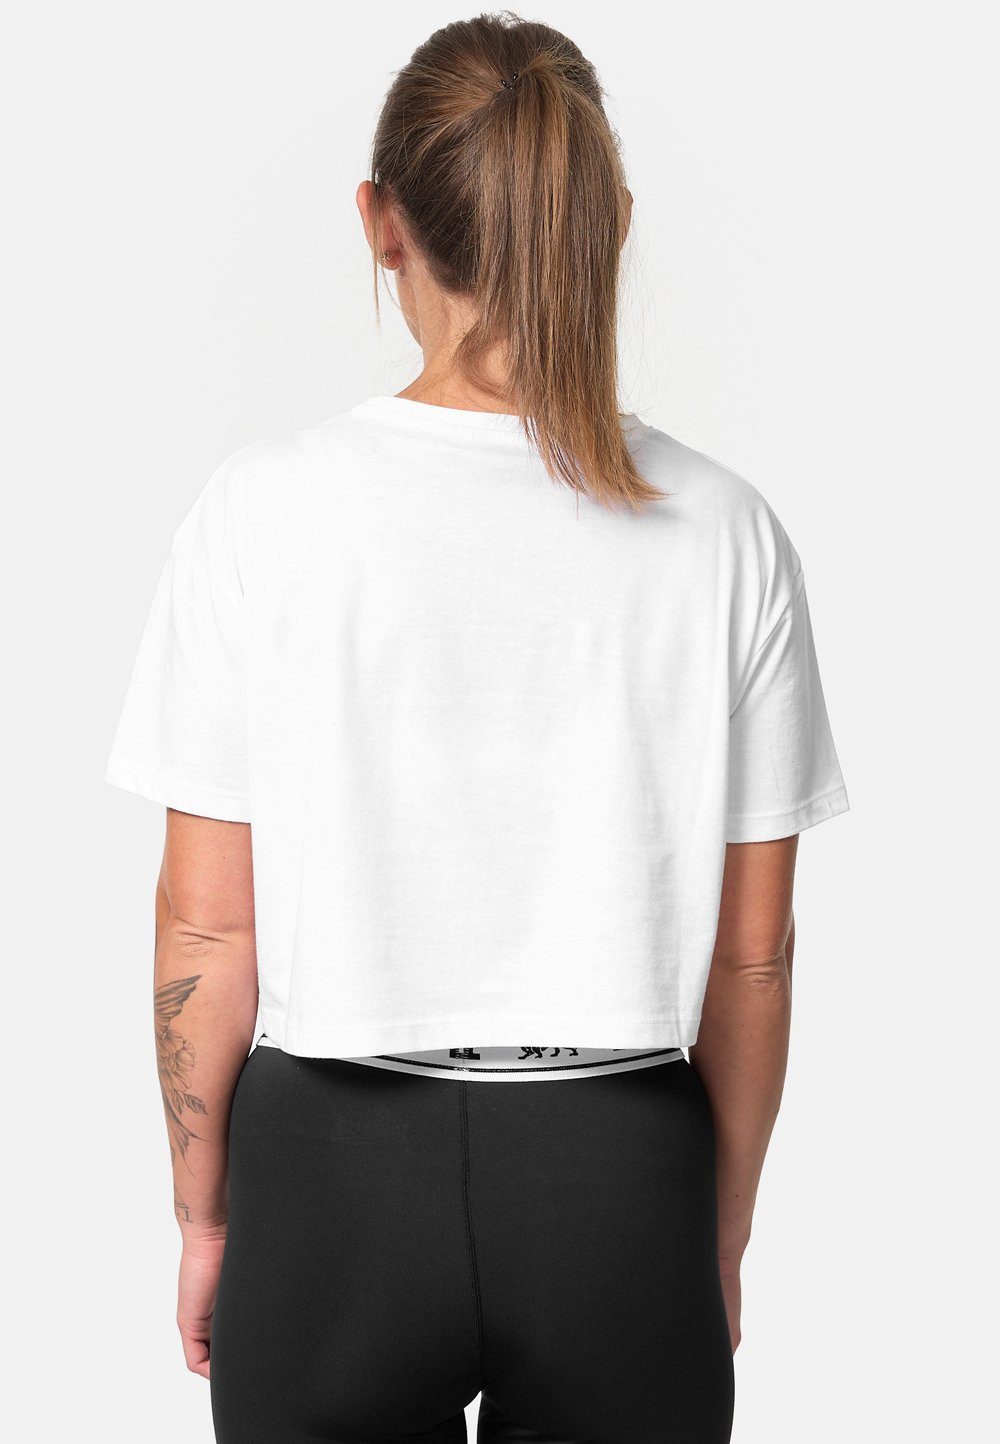 Lonsdale T-Shirt White/Black GUTCH COMMON